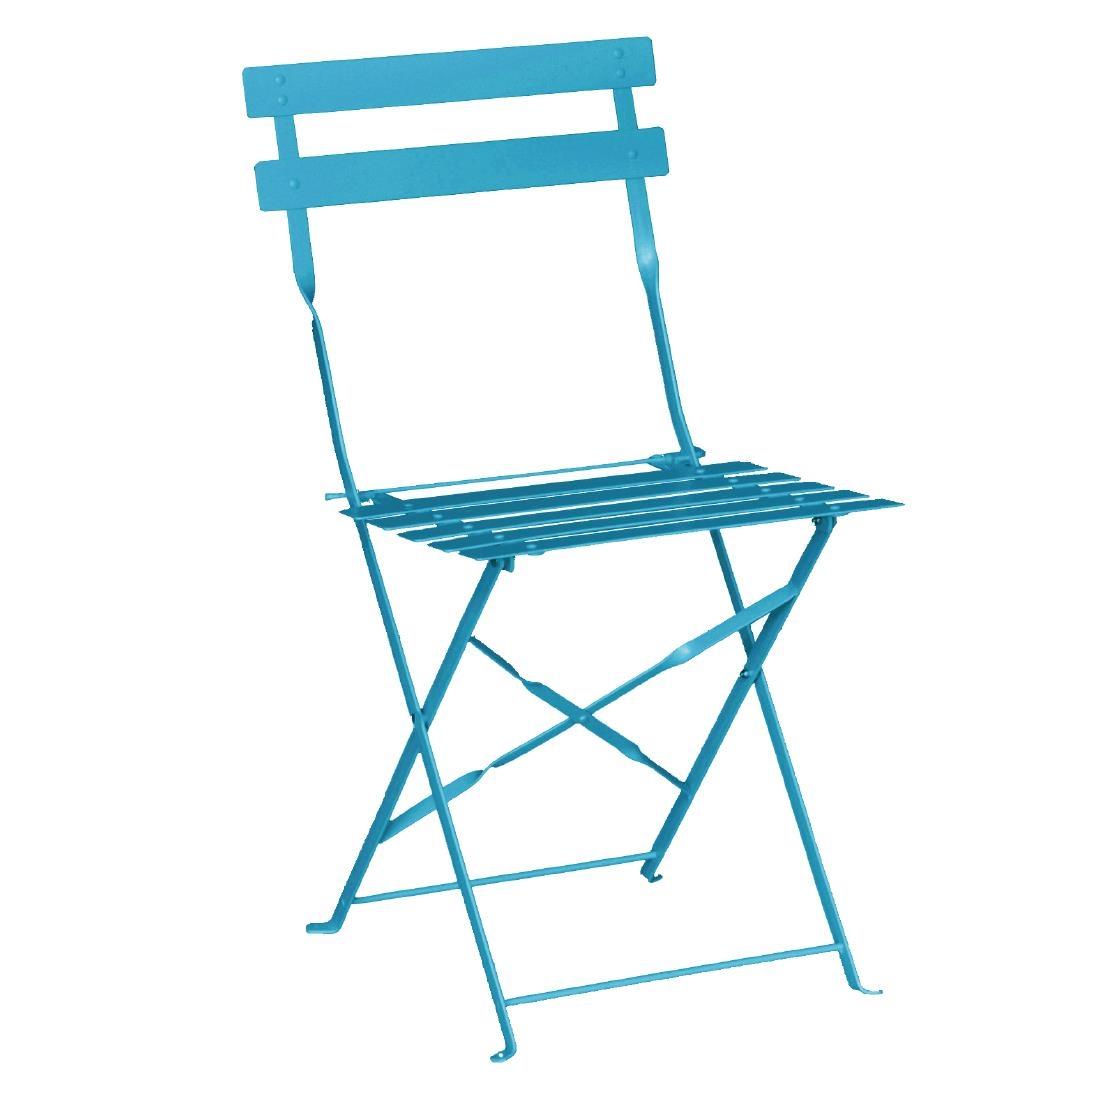 Bolero Pavement Style Steel Chairs Seaside Blue (Pack of 2) - GK982  - 2